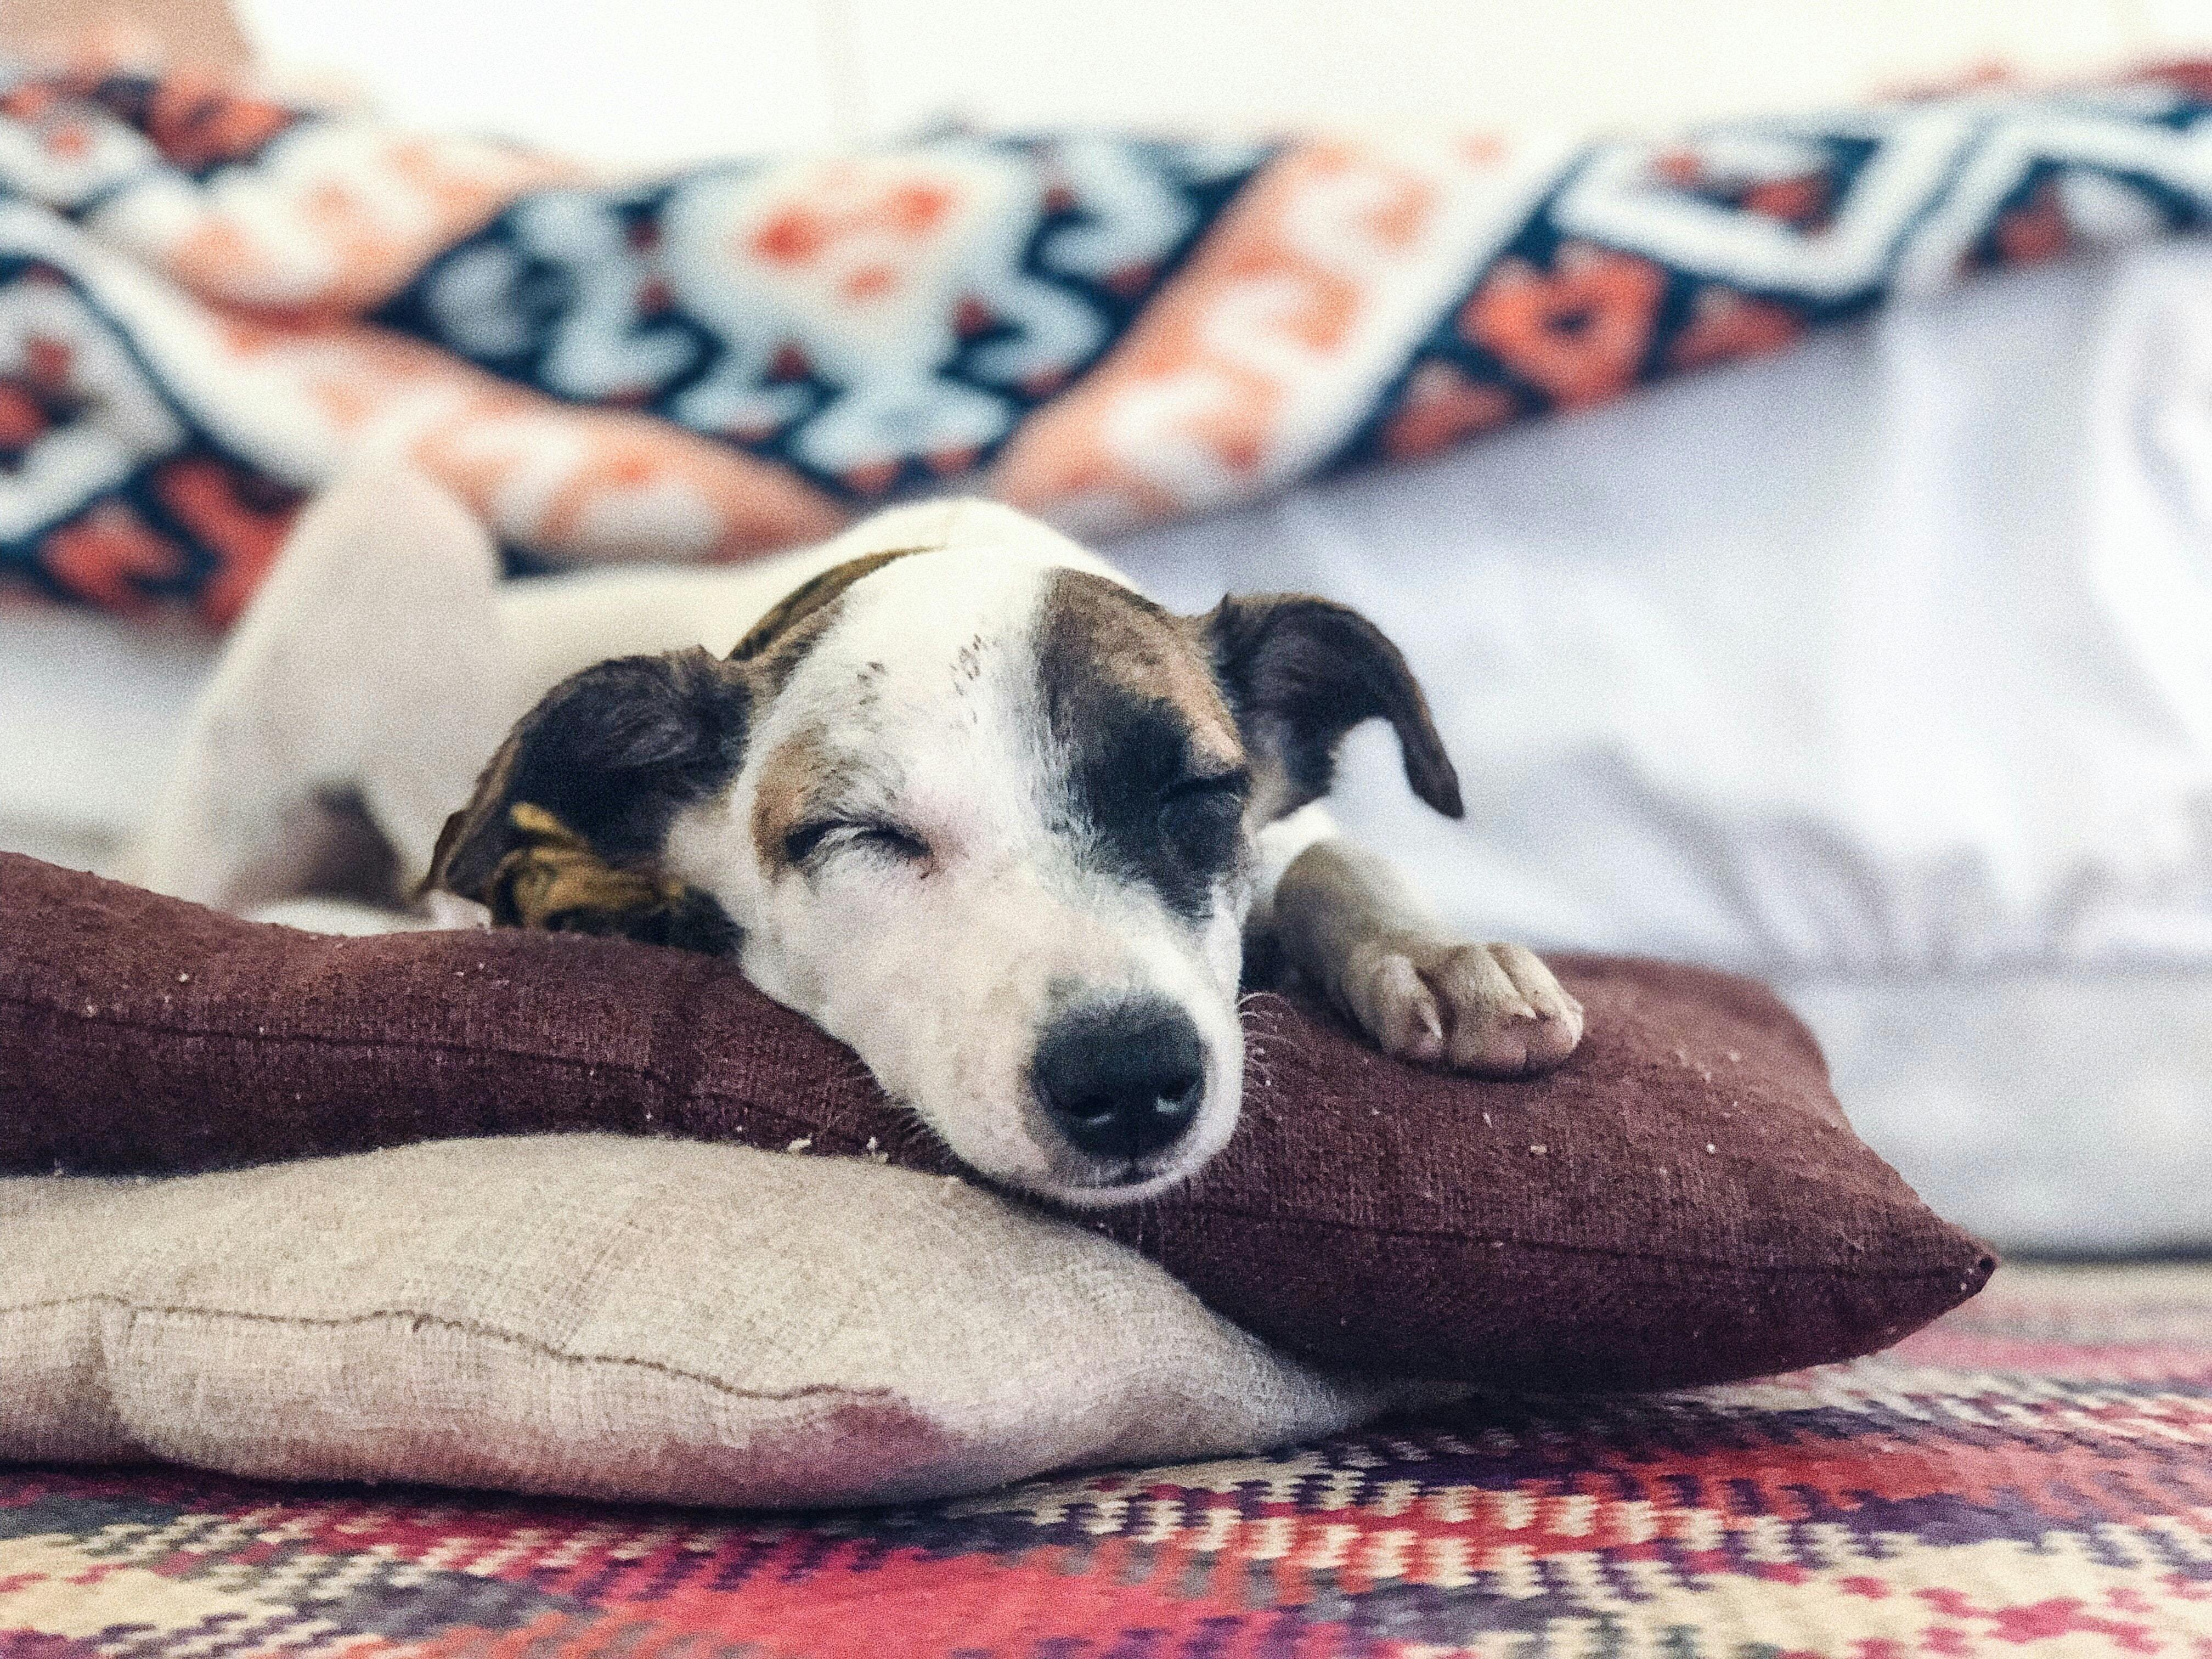 wellness-how-to-keep-a-dog-warm-at-night-hero-image